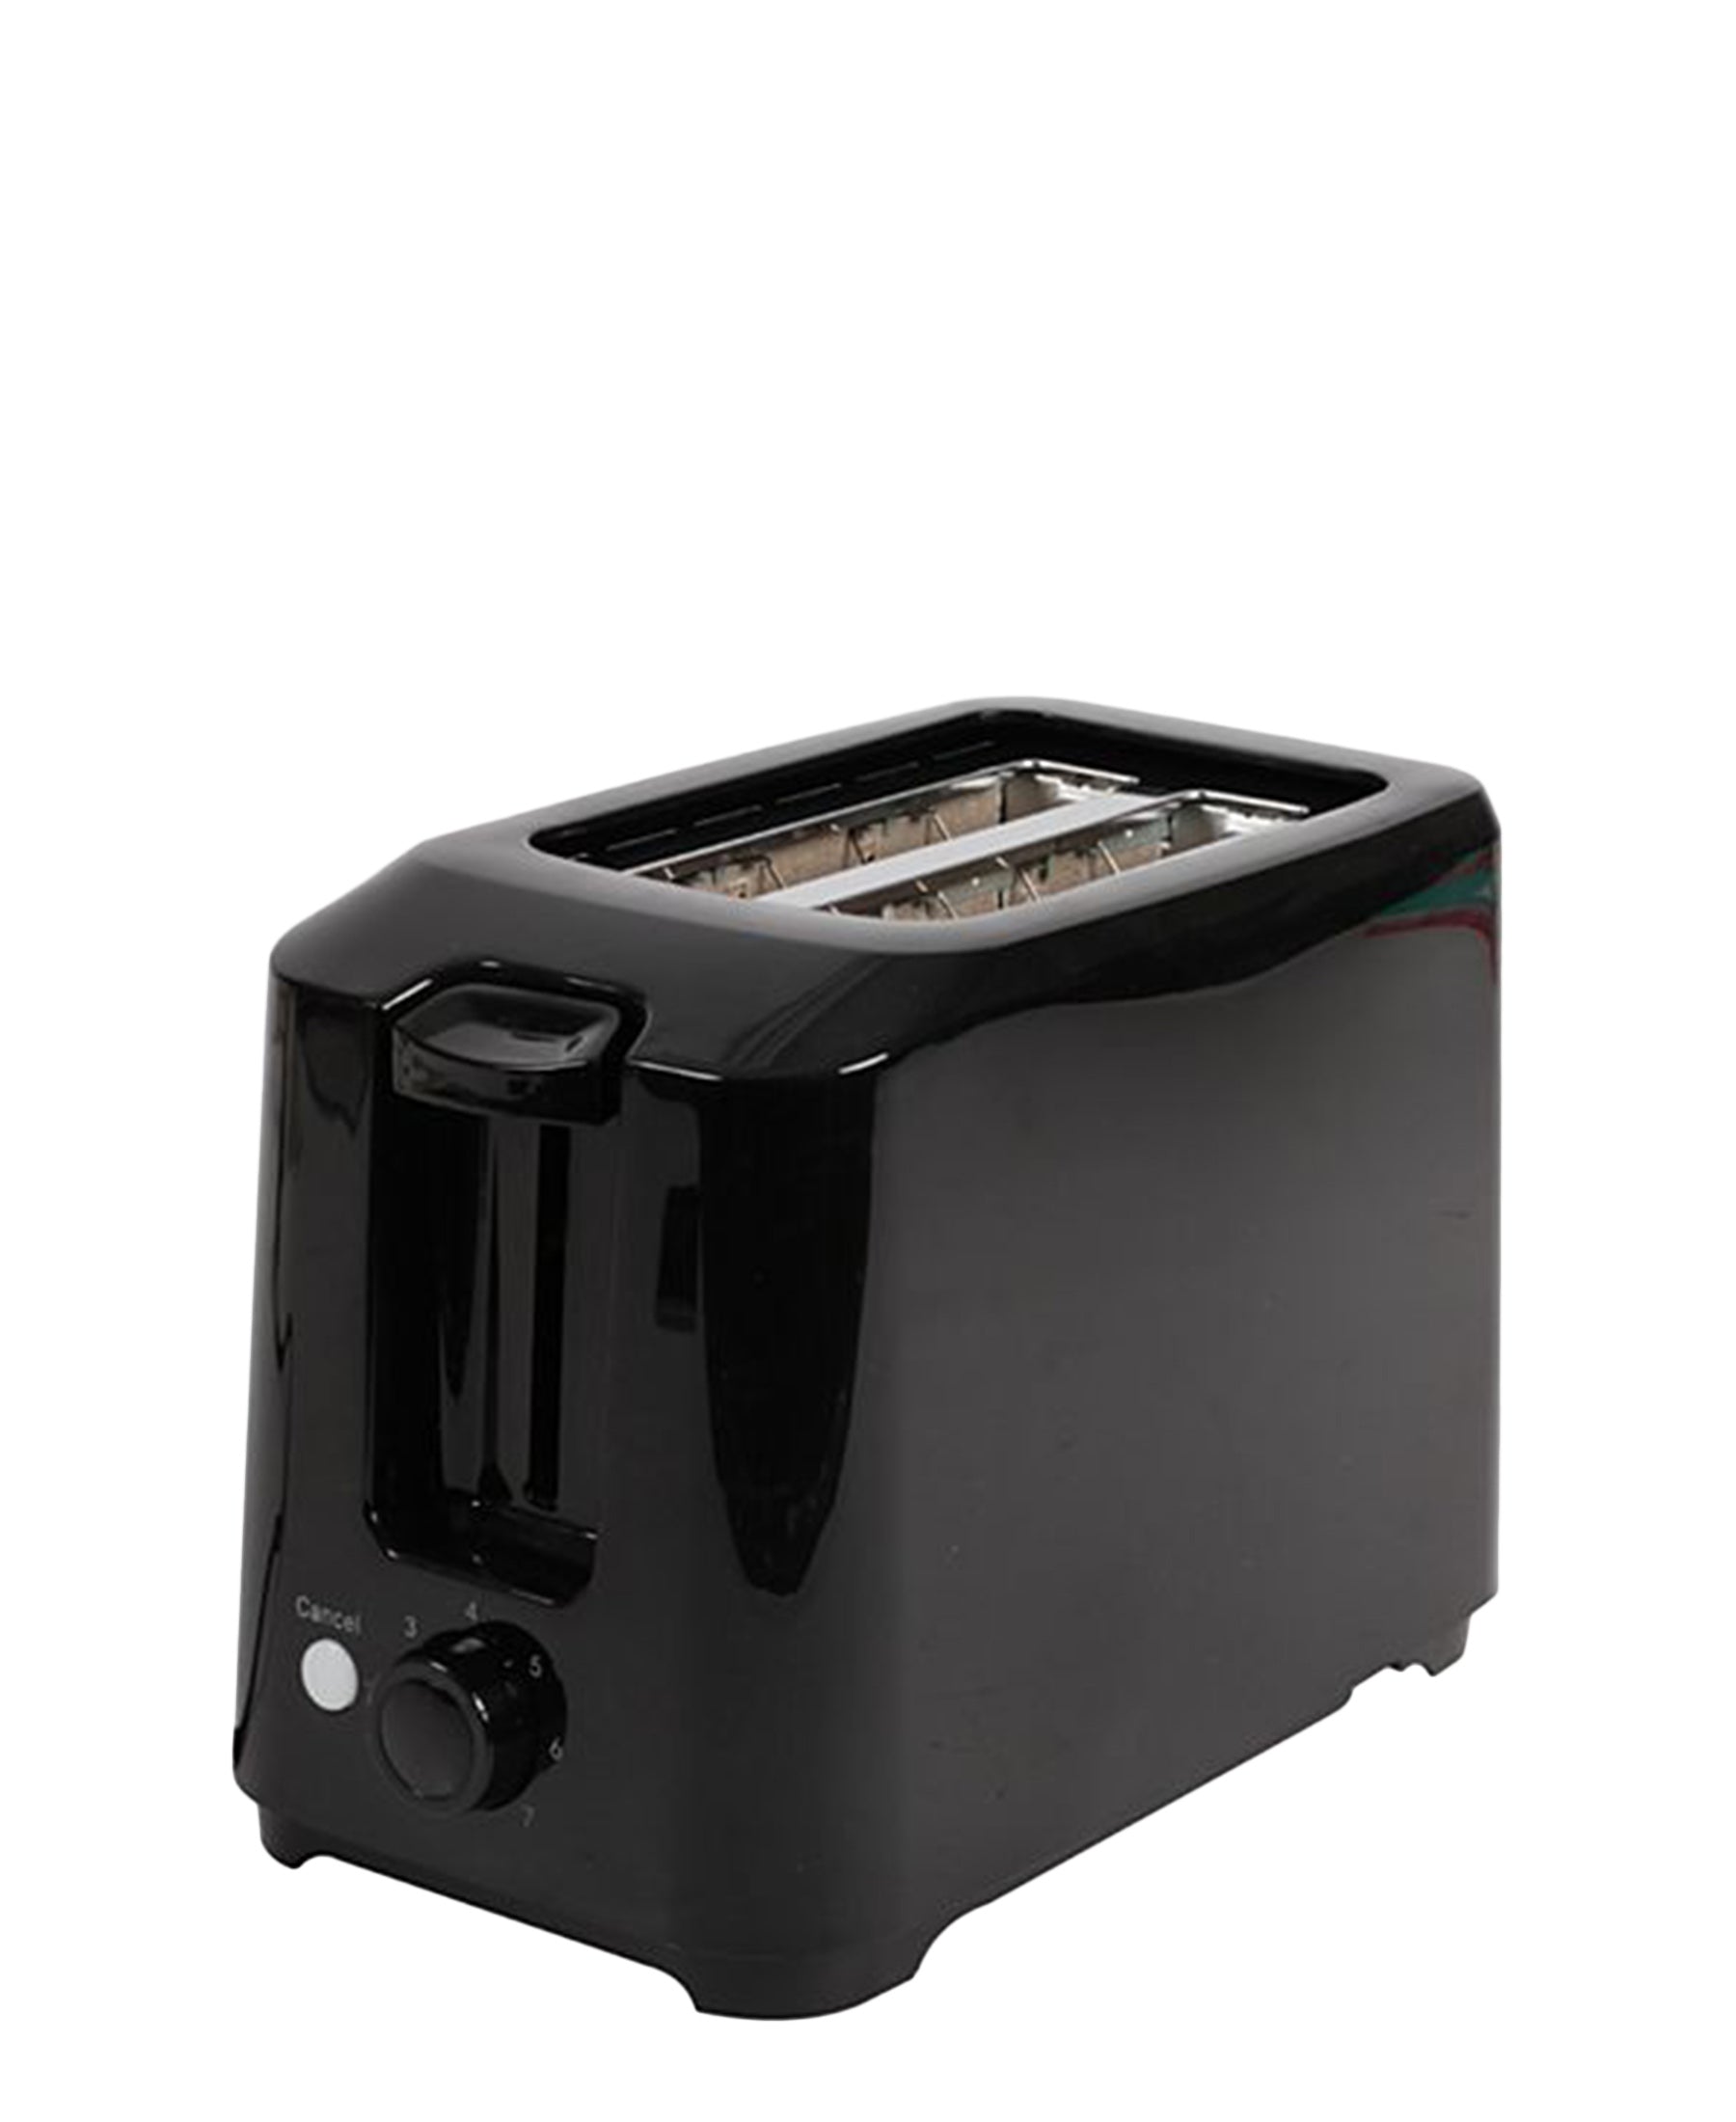 Mellerware 2 Slice Toaster - Black